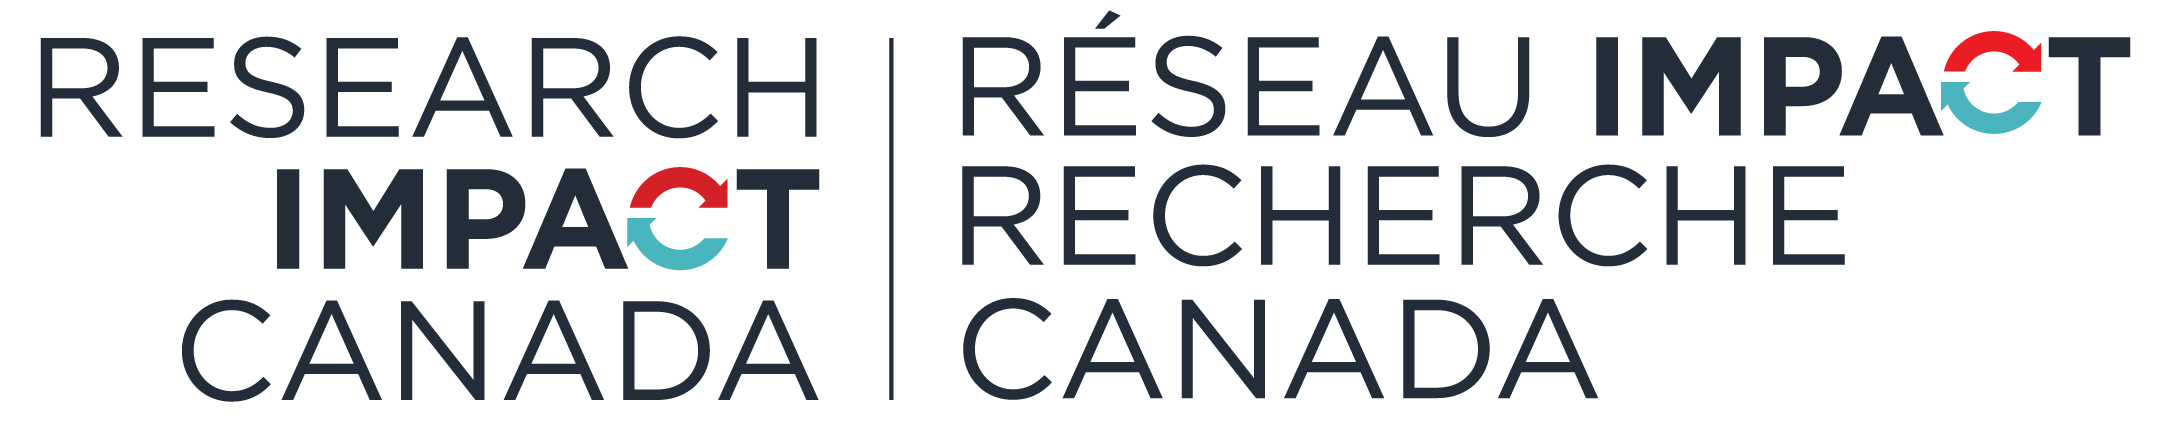 Resarch Impact Canada